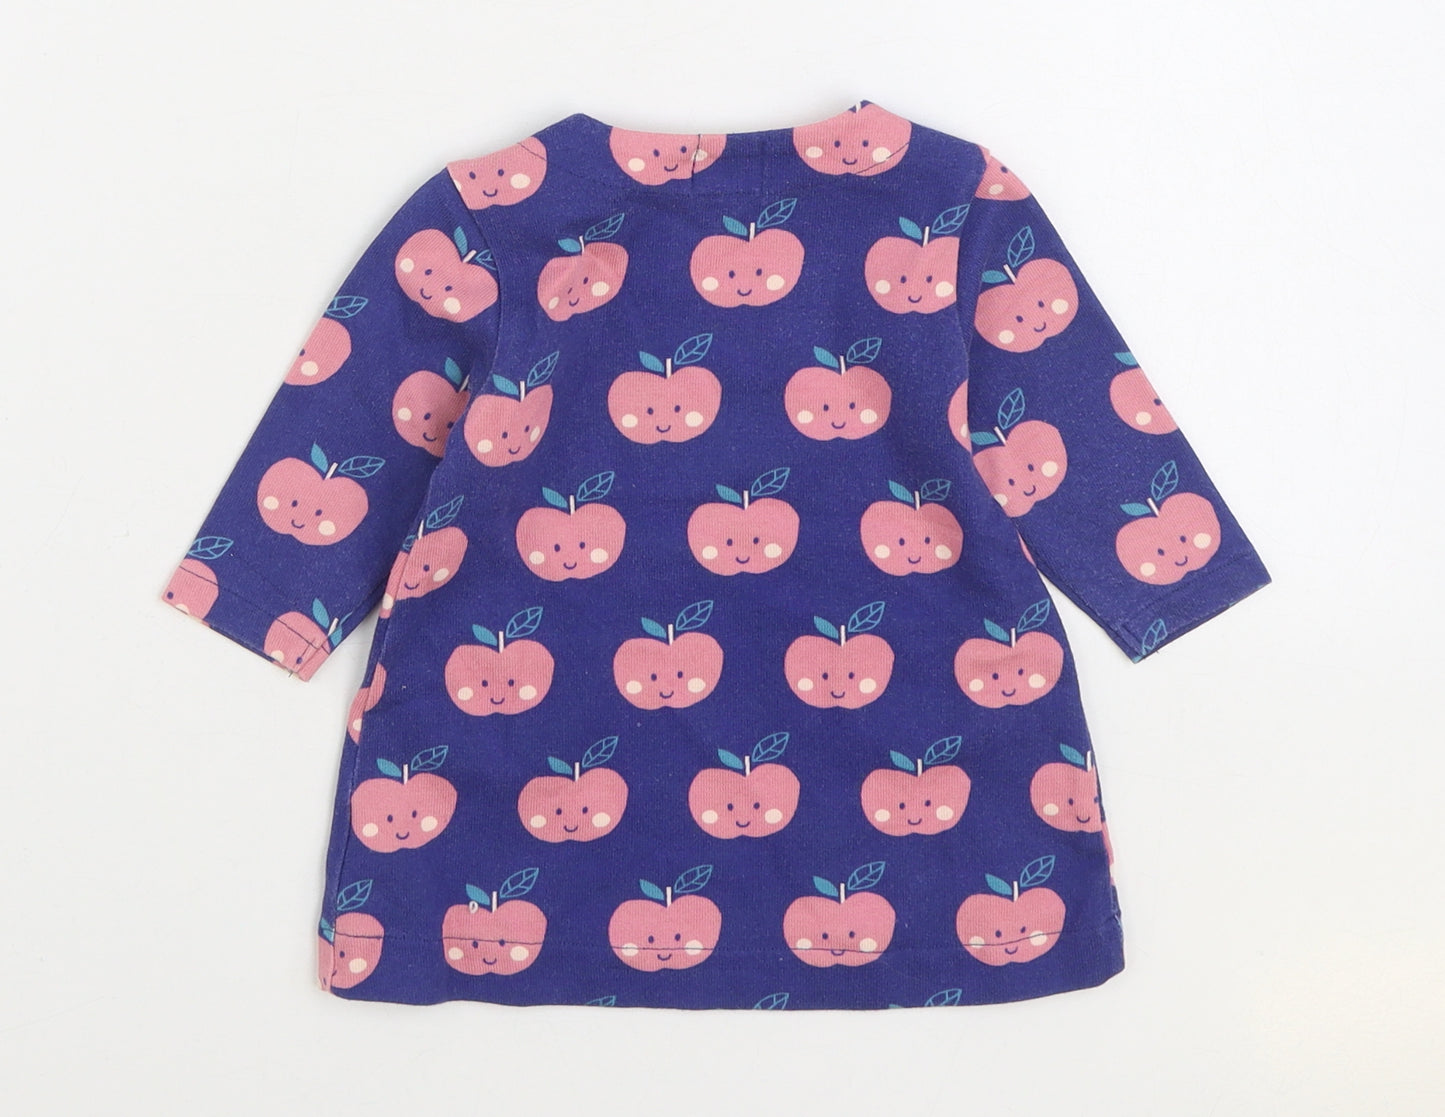 Hatley Girls Blue Geometric 100% Cotton Jumper Dress Size 3-6 Months Round Neck Button - Apples